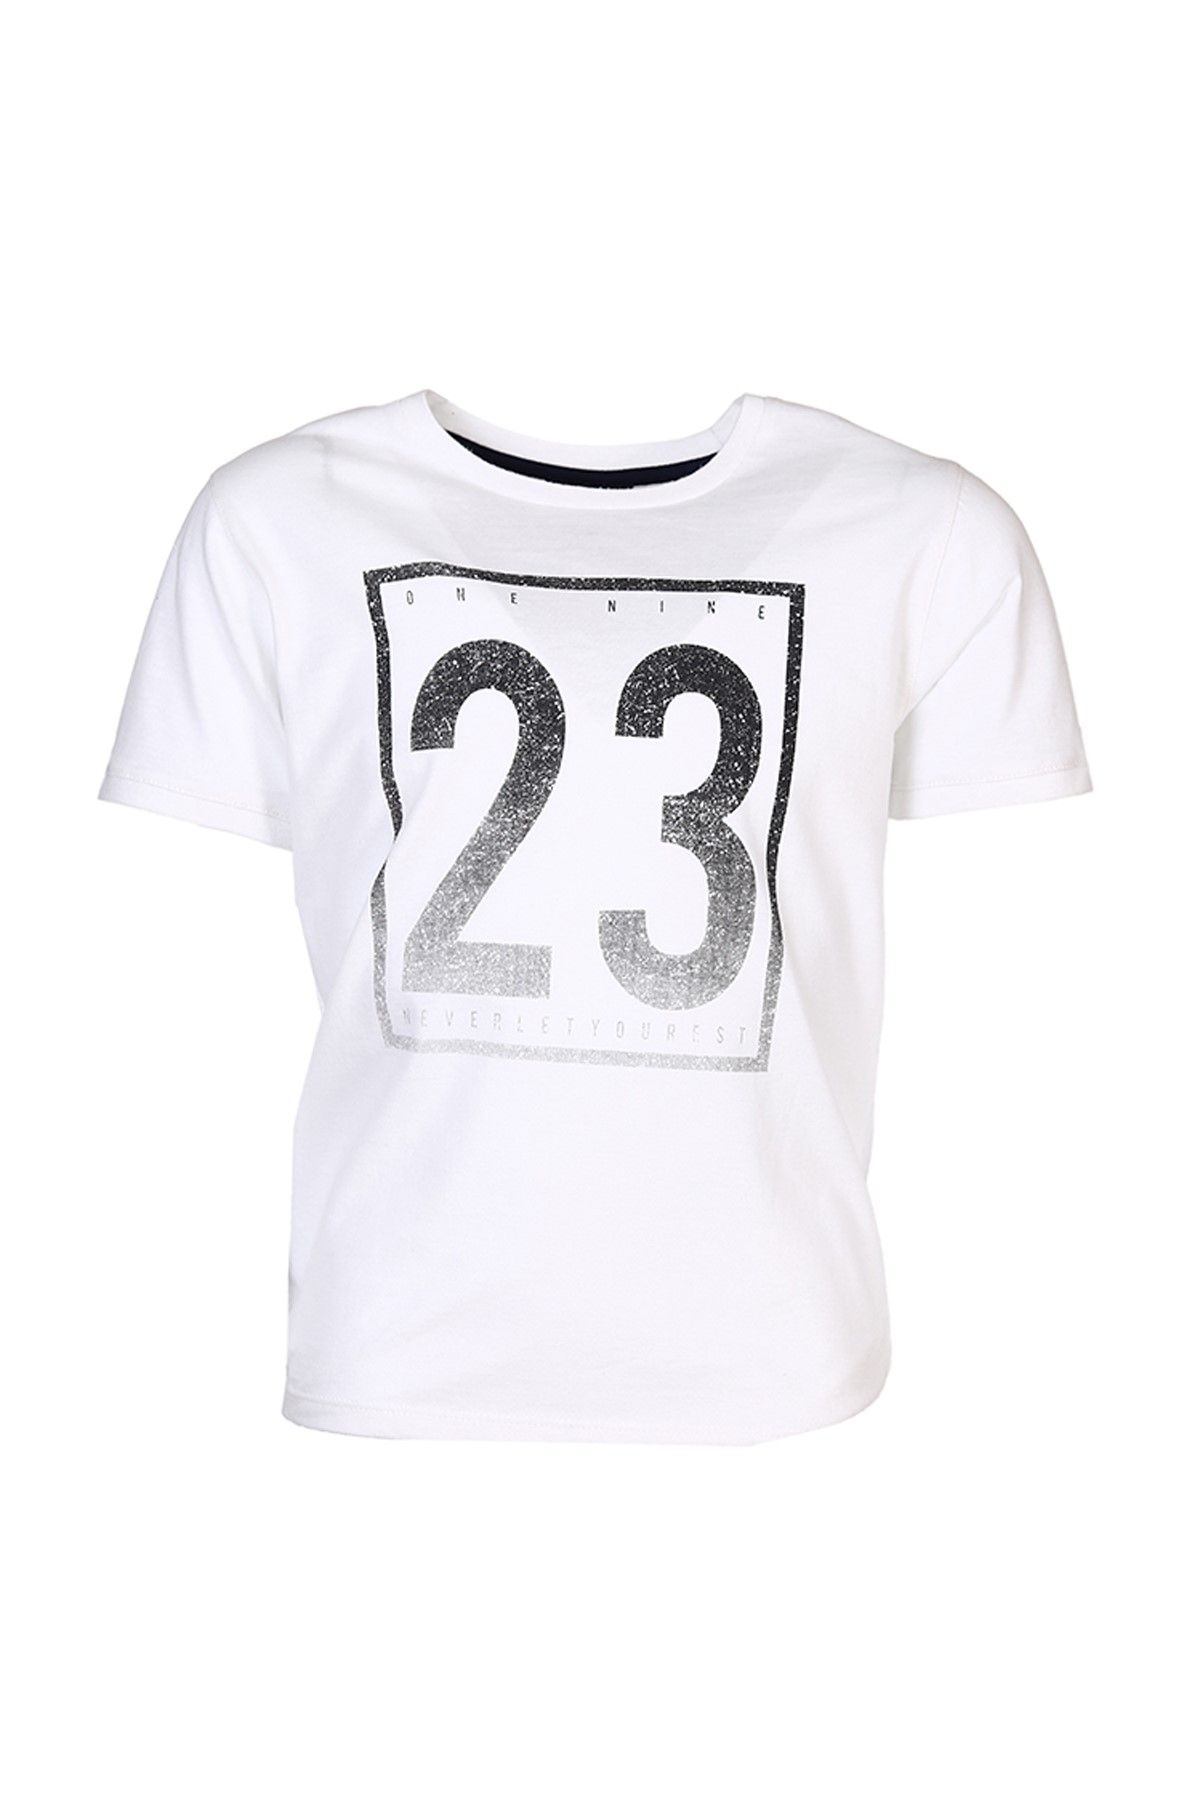 hummel Beyaz Erkek Çocuk T-shirt T09092-9001